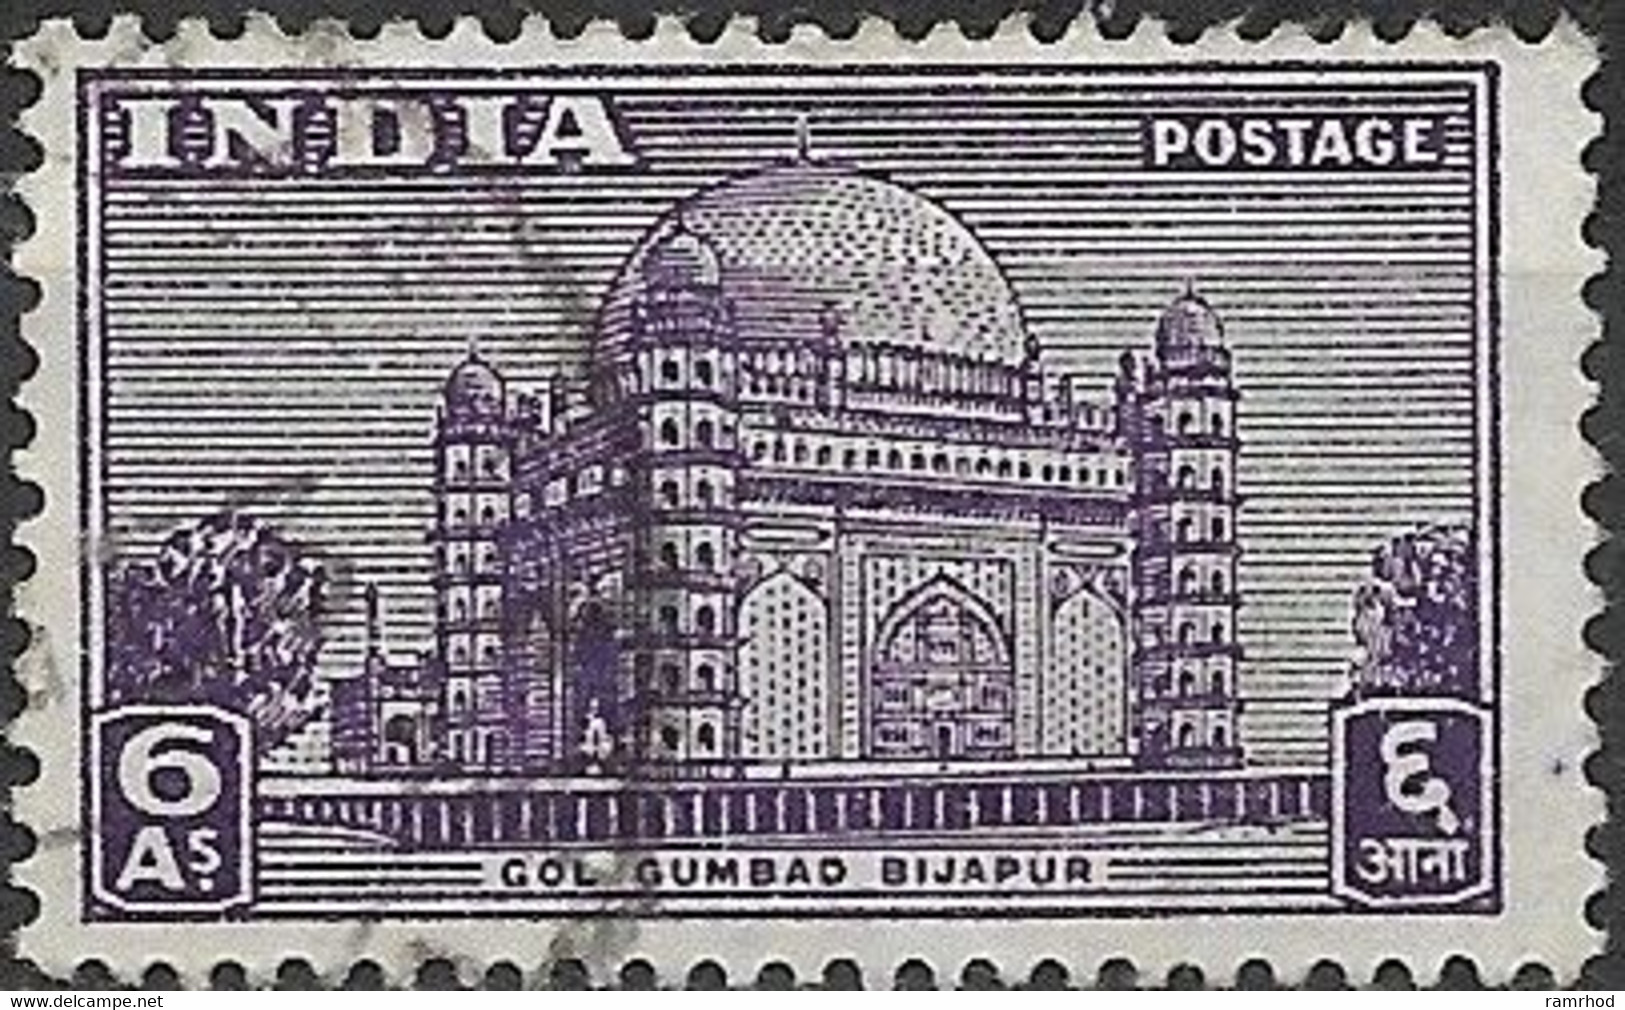 INDIA 1949 Gol Gumbad, Bijapur - 6a - Violet FU - Usados